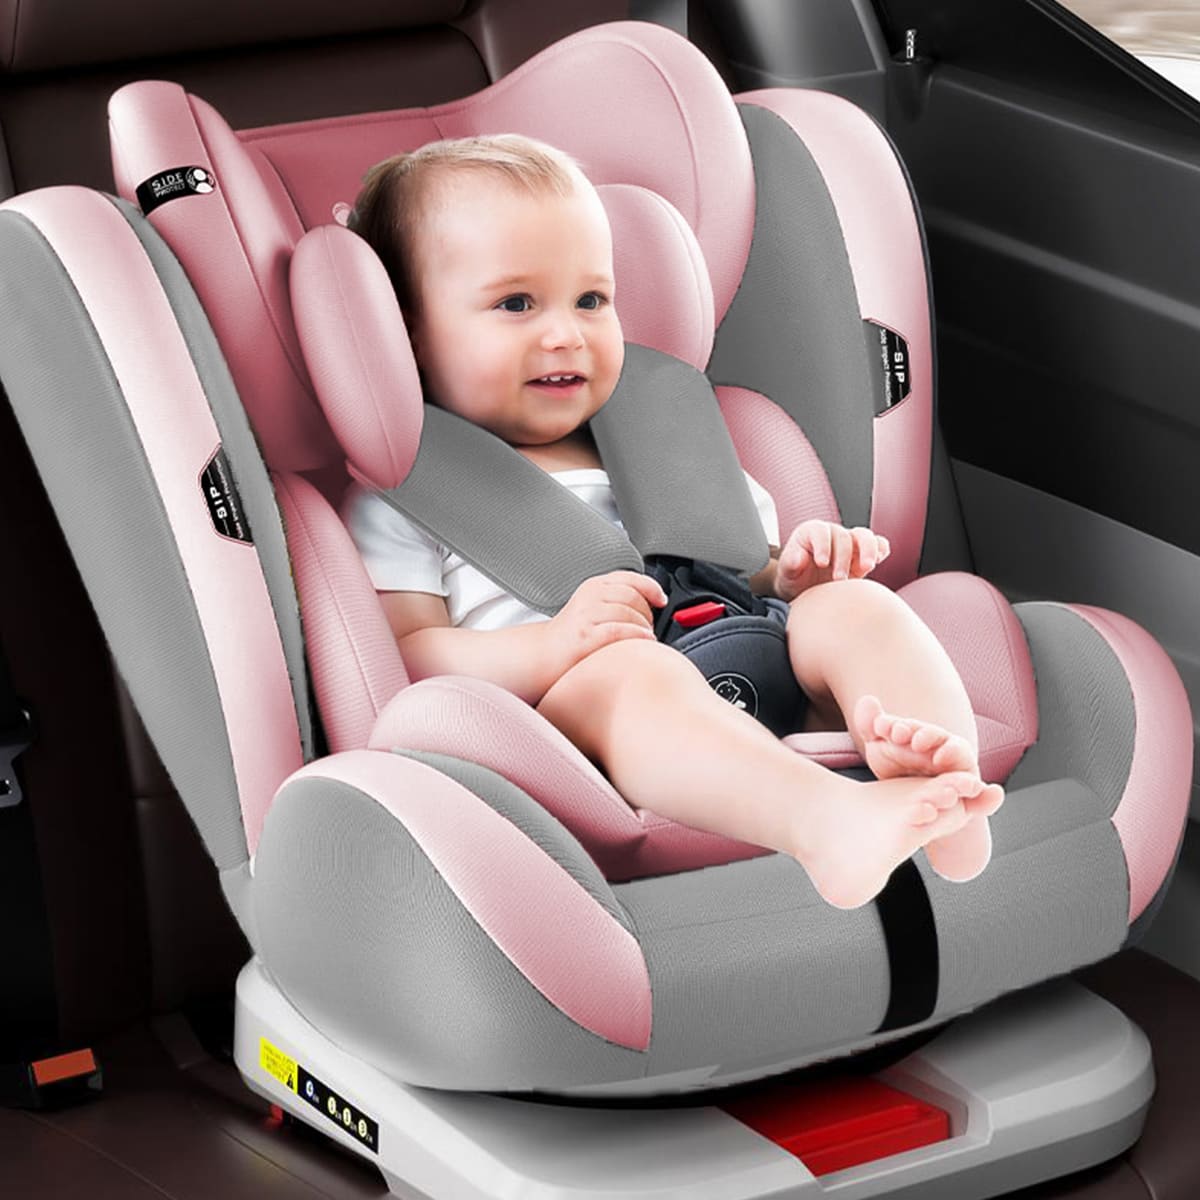 https://staranddaisy.in/wp-content/uploads/2023/03/baby-car-seat-pink-18823-1.jpg